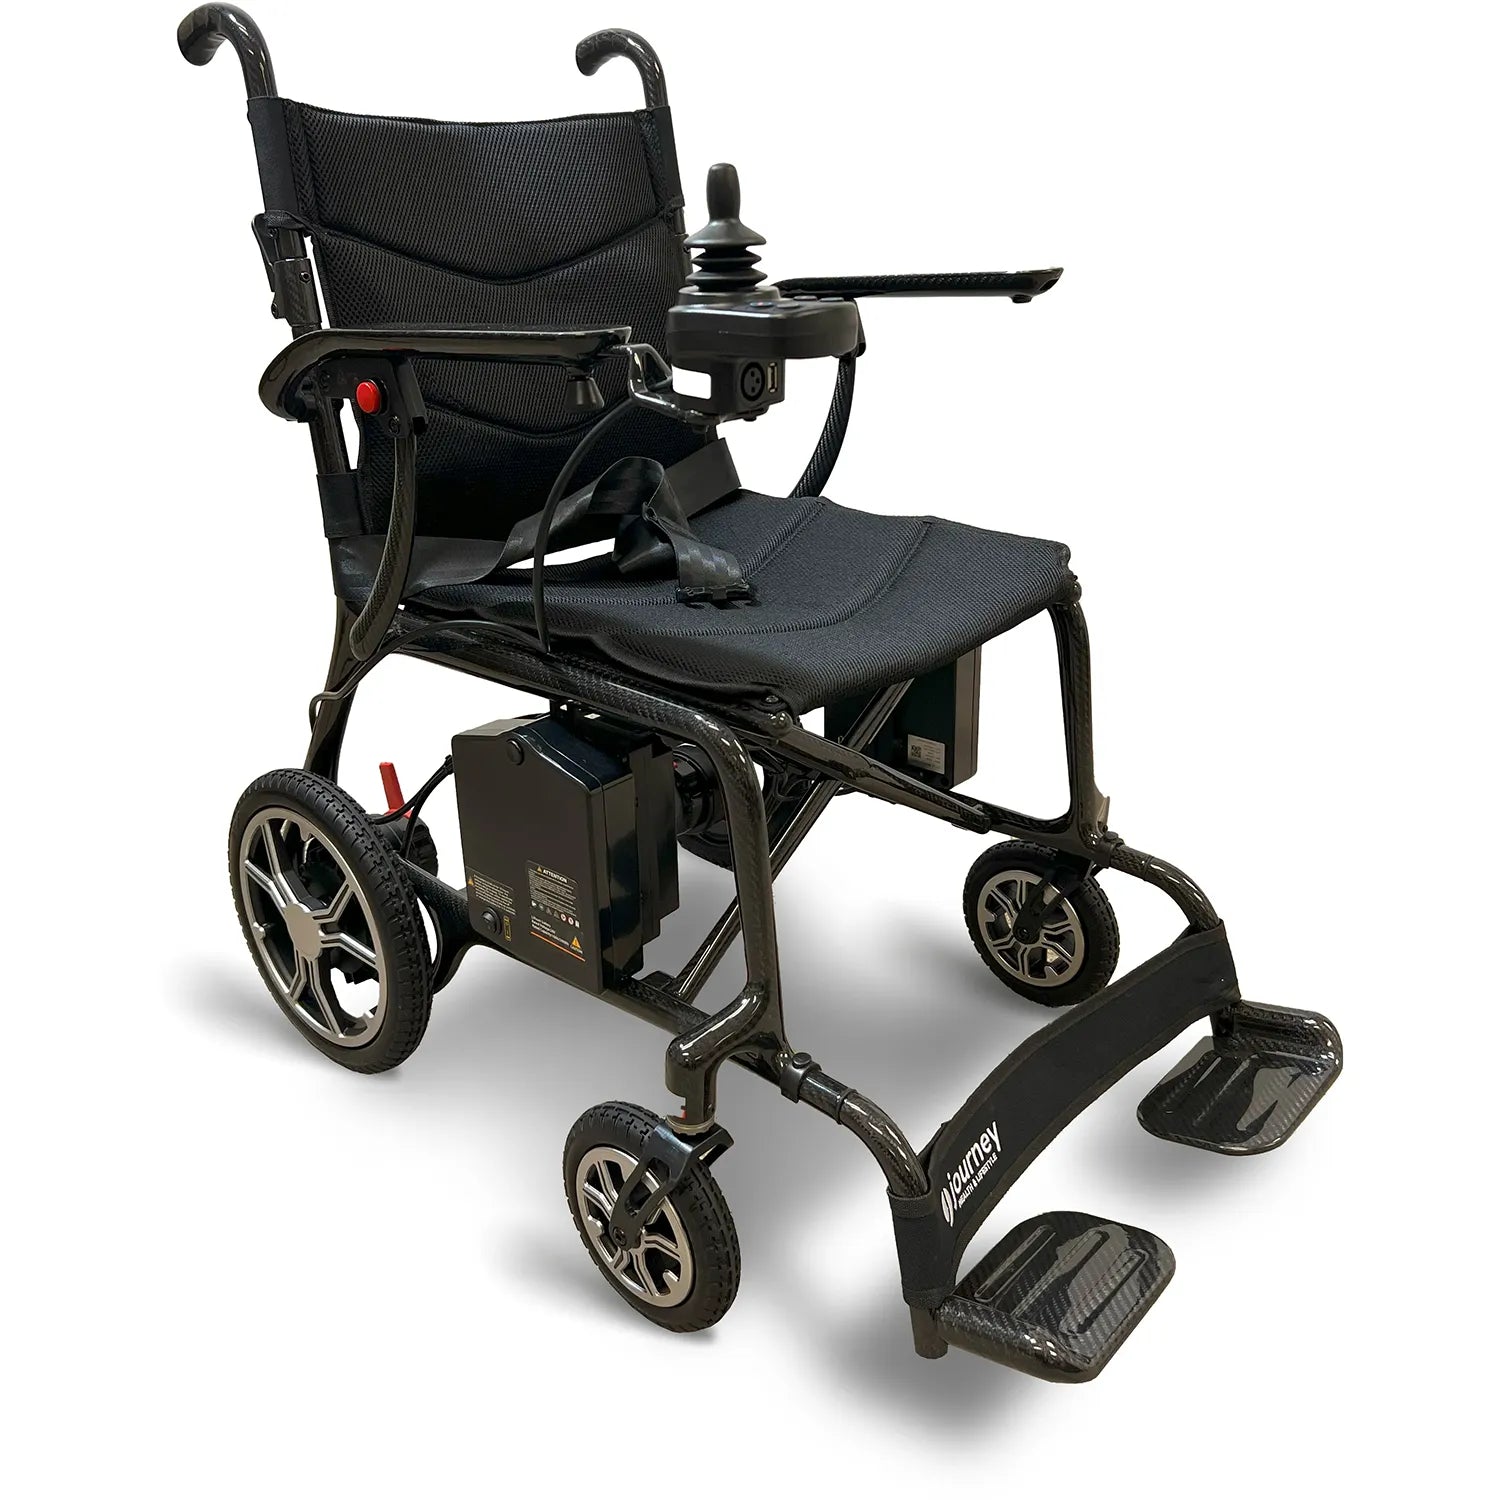 Journey Zoomer Air Elite "World’s Lightest" Folding Power Chair- Ultra Lightweight Electric Wheelchair Power wheelchairs Journey   